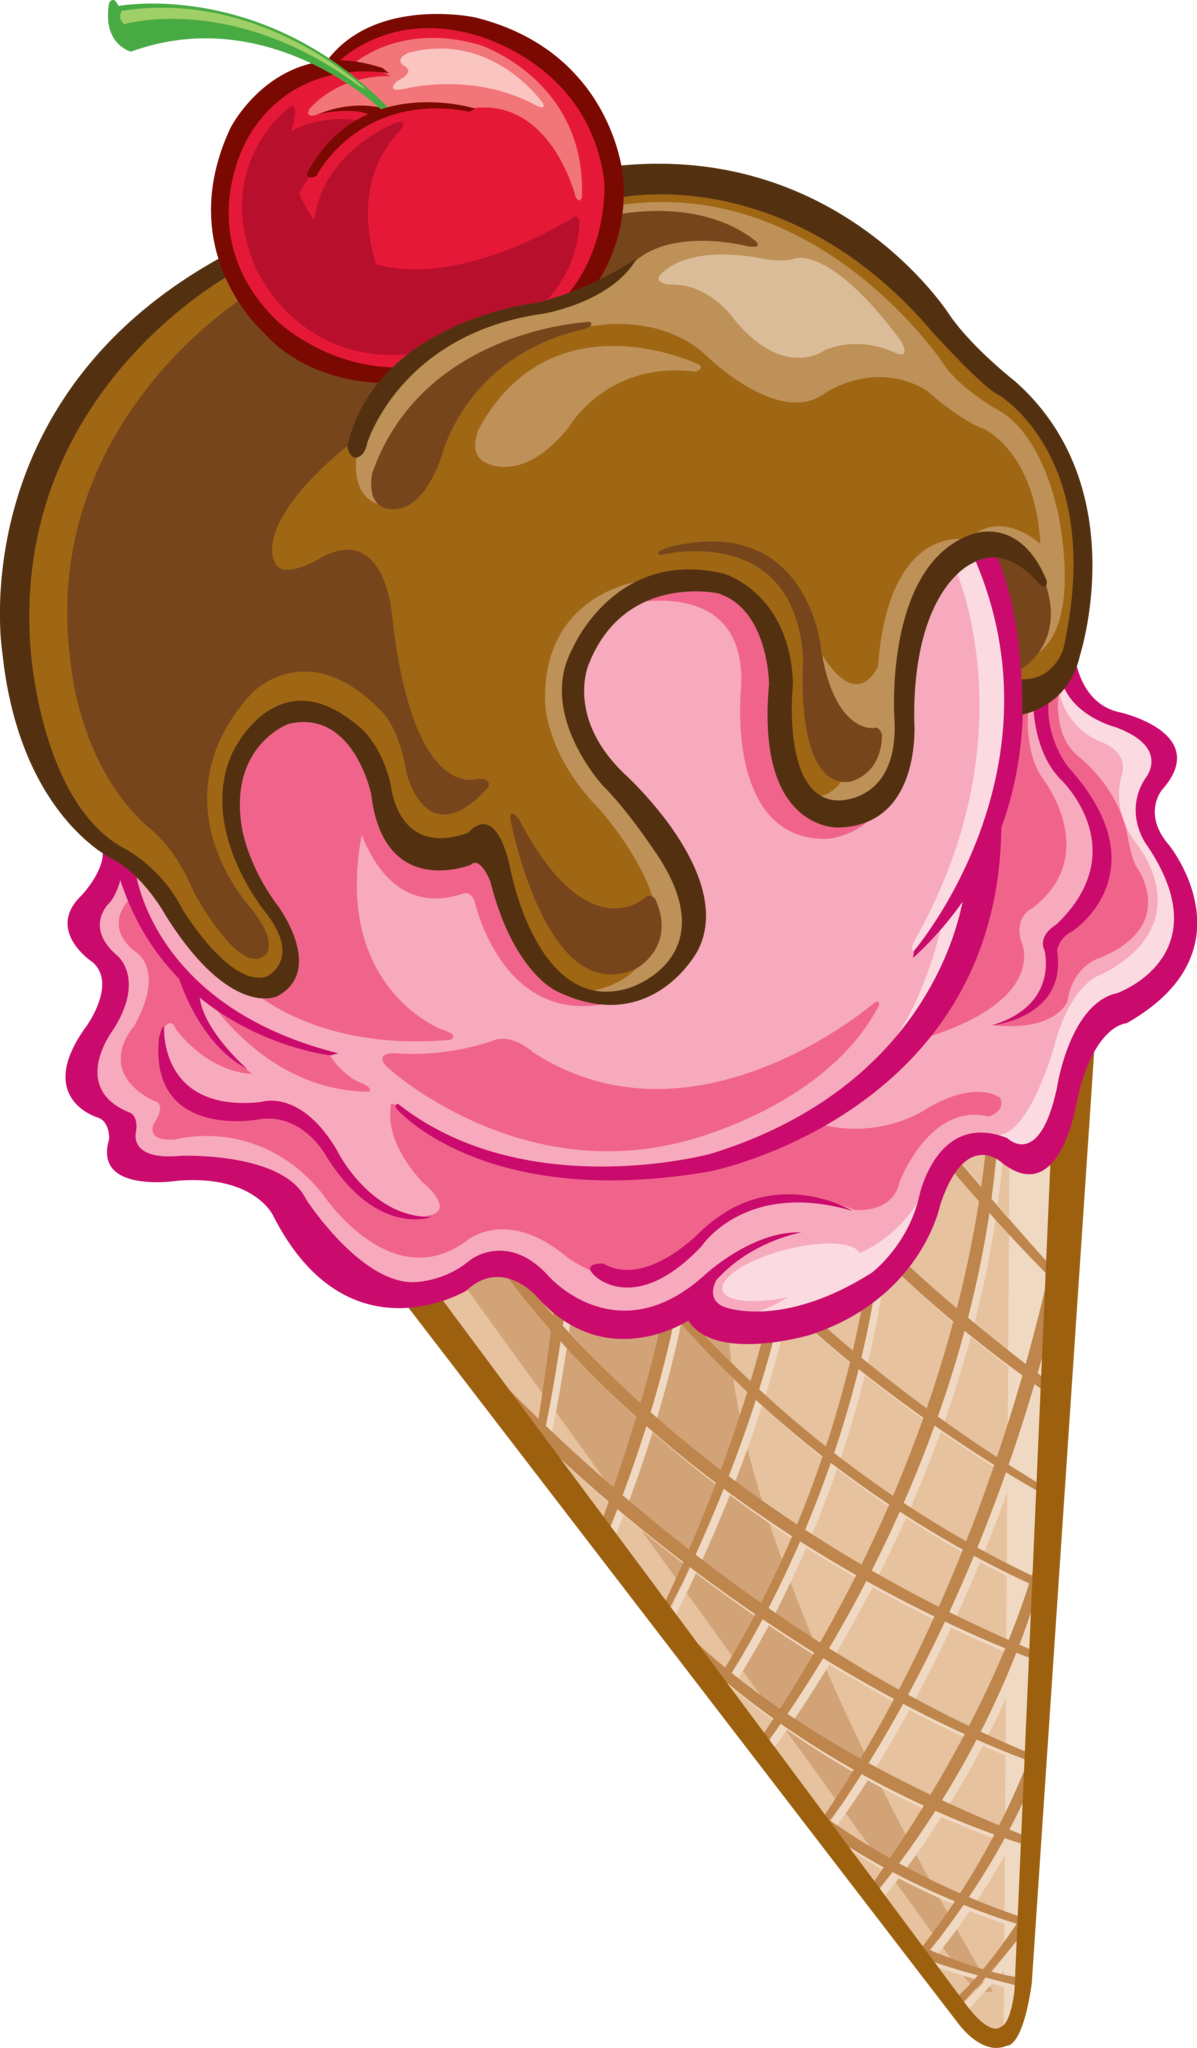 Sweet Ice Cream Kite For Kids - Kites And Ice Cream (1197x2048)